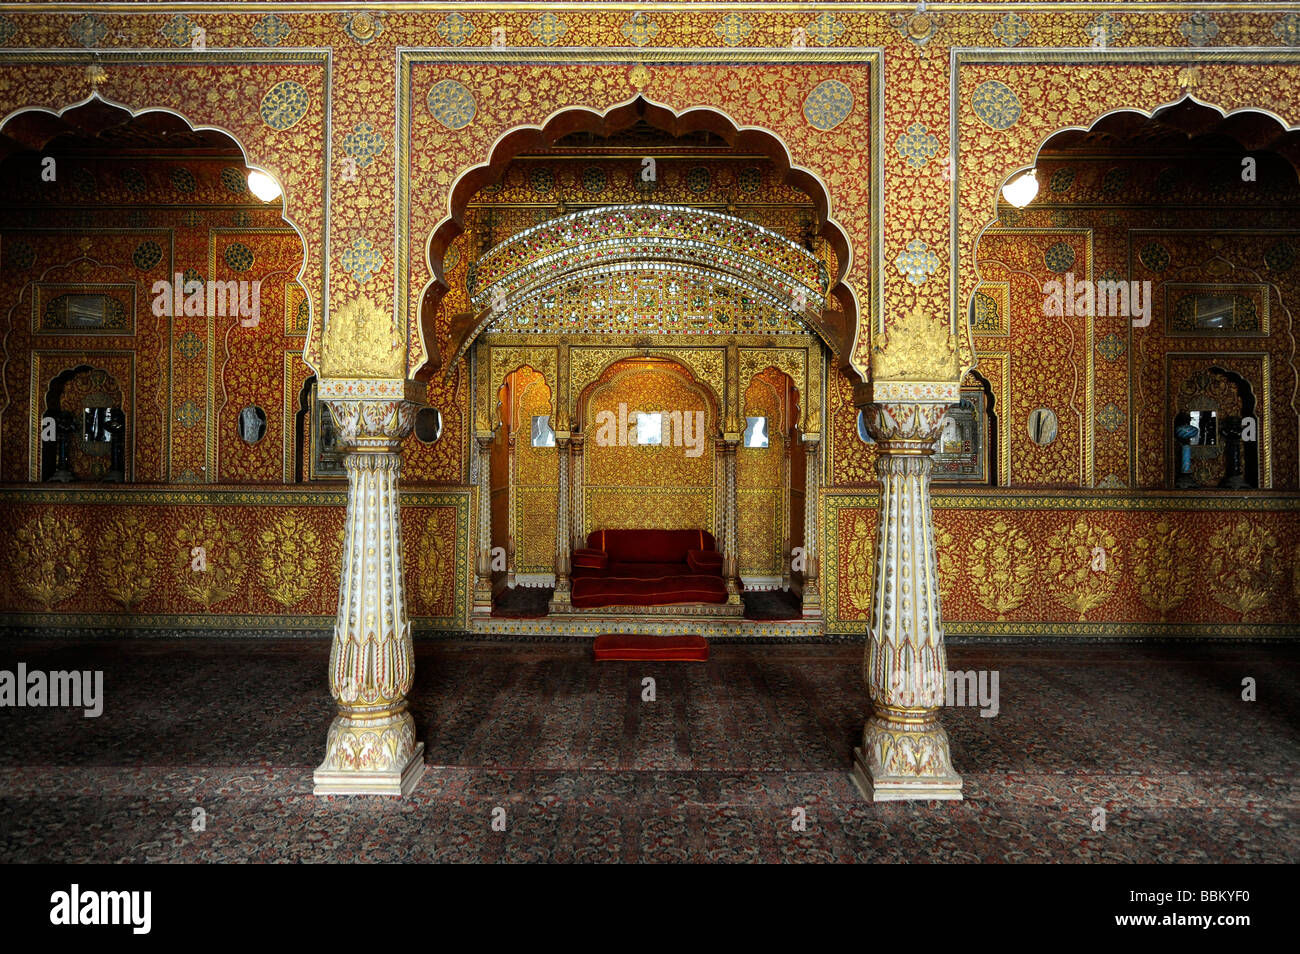 Private audience hall, Anup Mahal, Junagarh Fort, city palace, Bikaner, Rajasthan, North India, South Asia Stock Photo